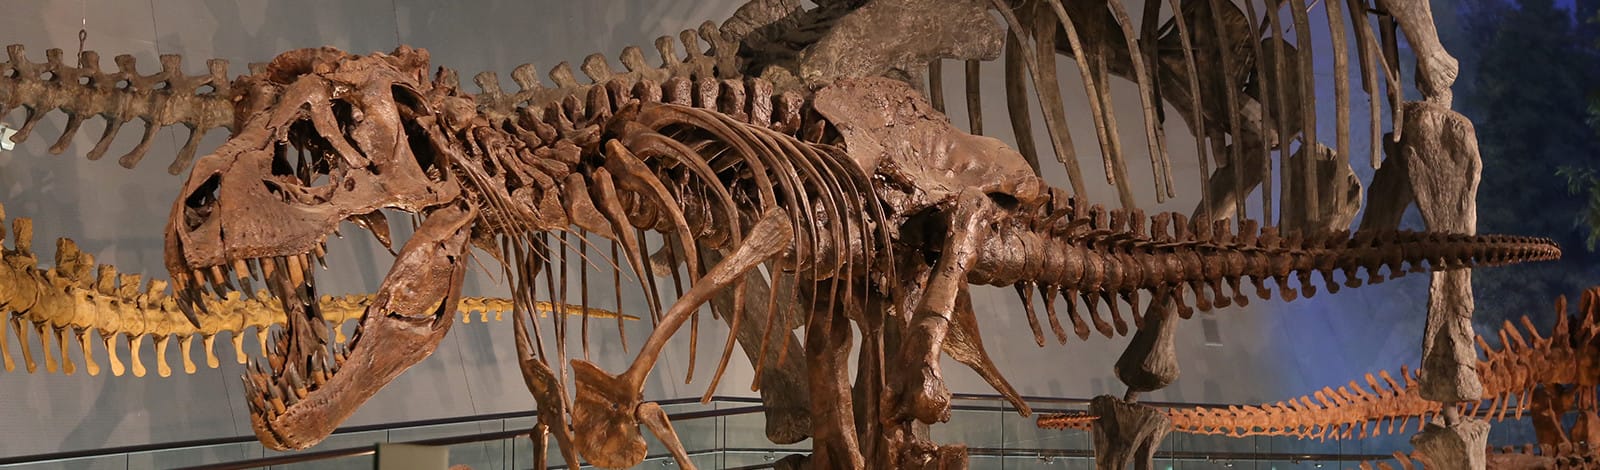 Whole body skeleton of Tyrannosaurus